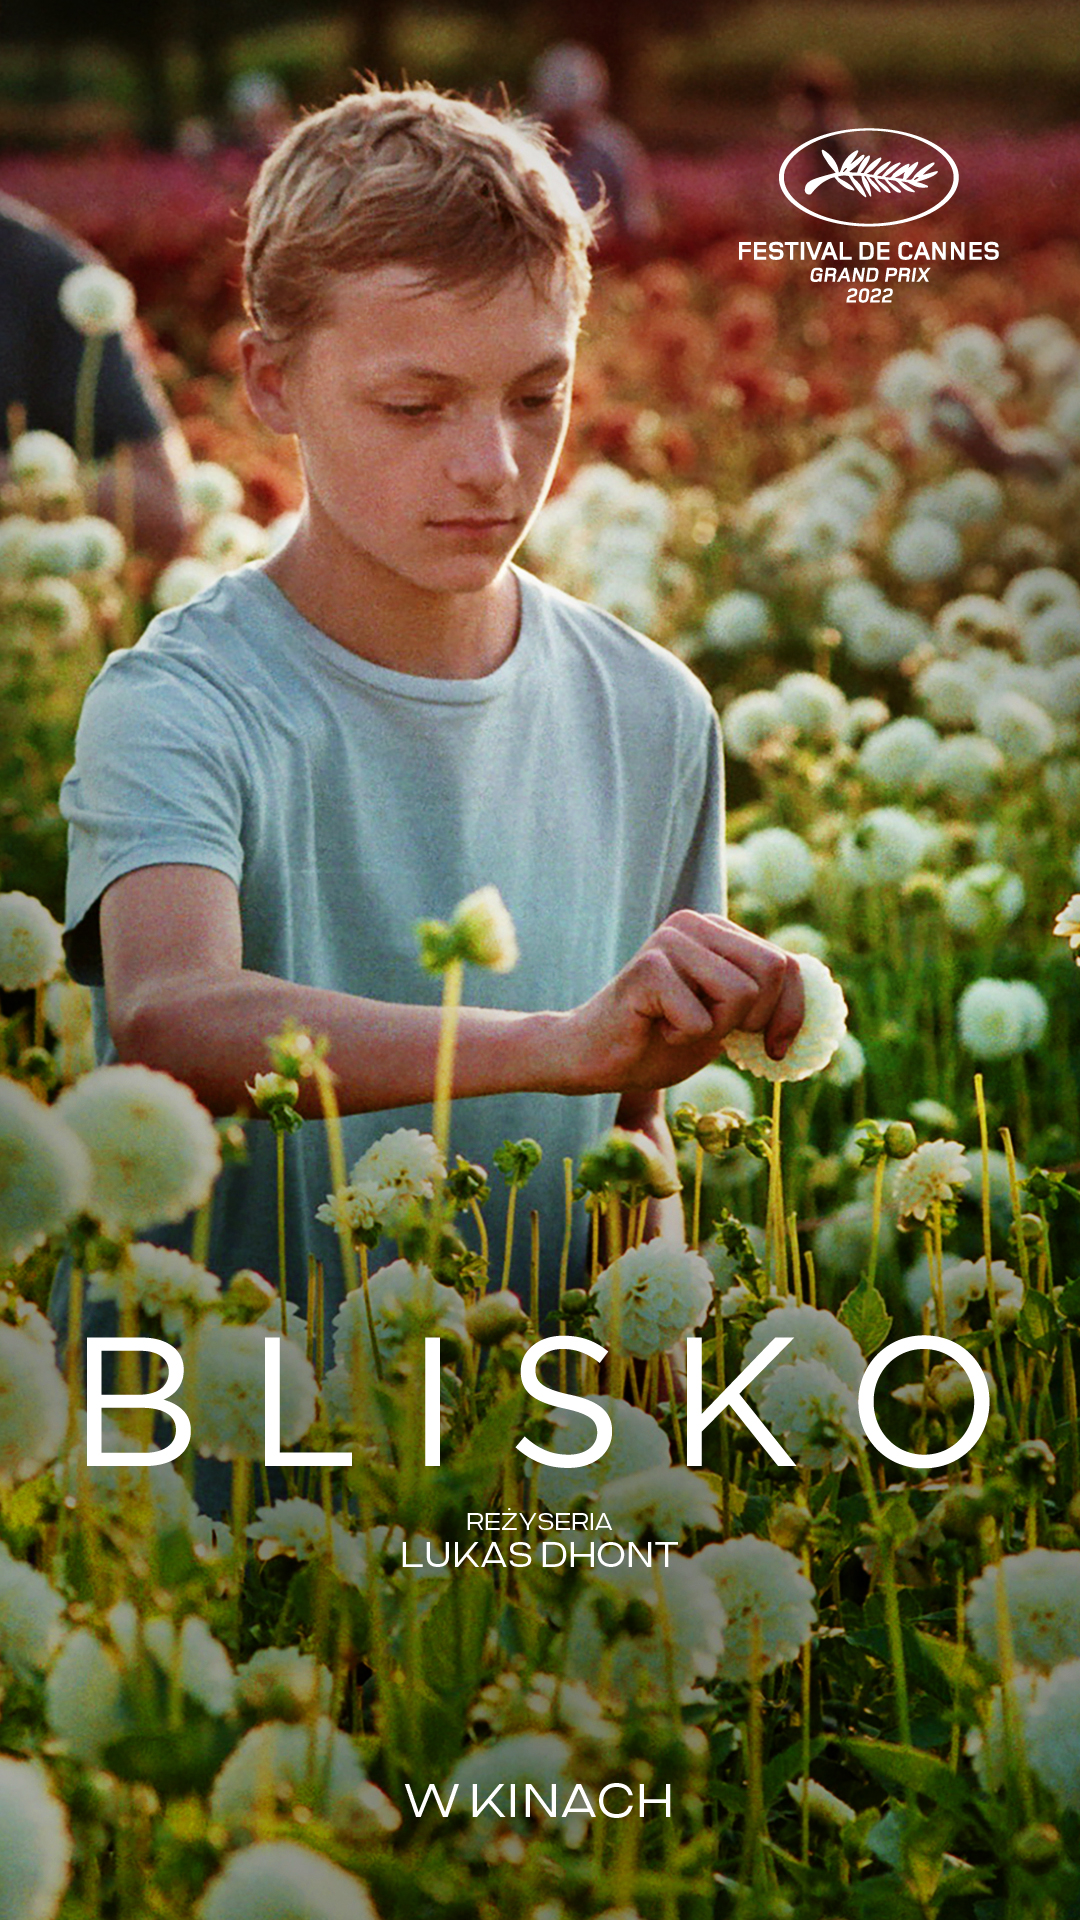 Blisko-Stories-9-16-fotos-2